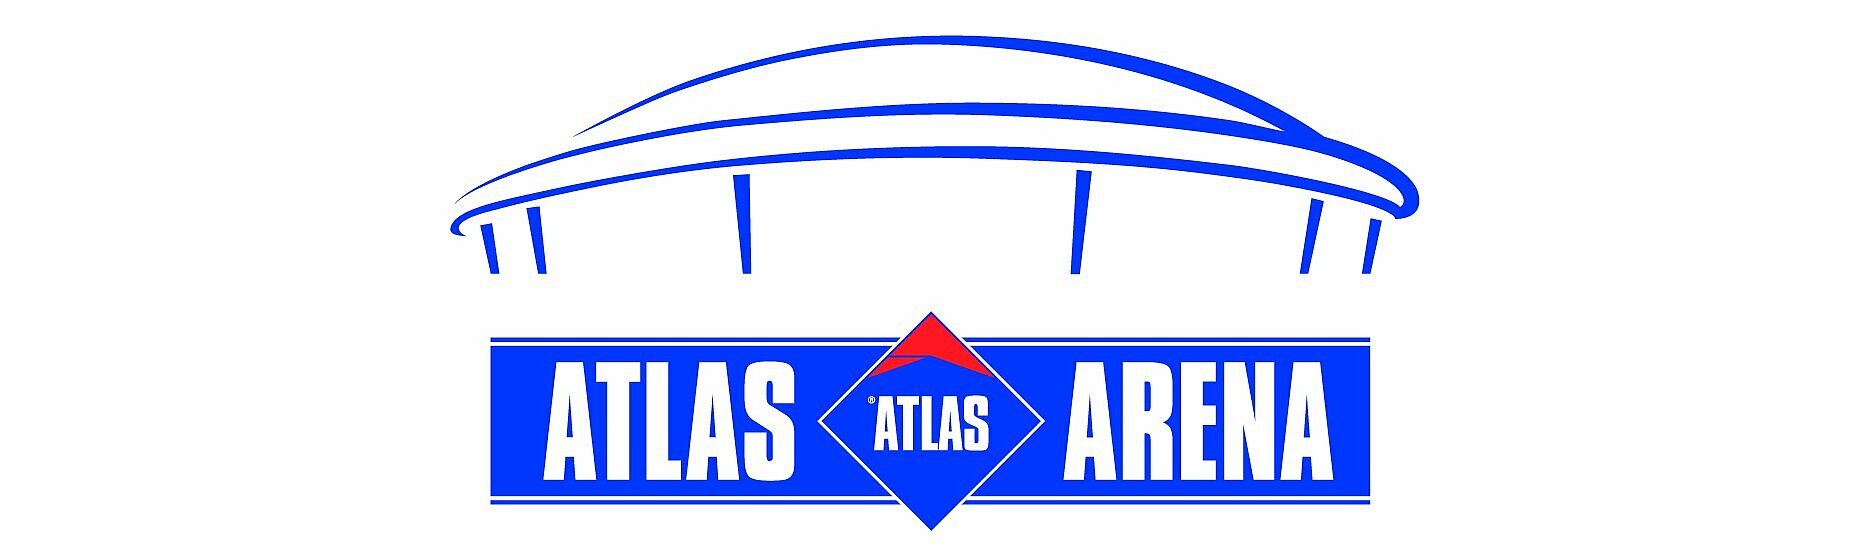  , atlas arena logo